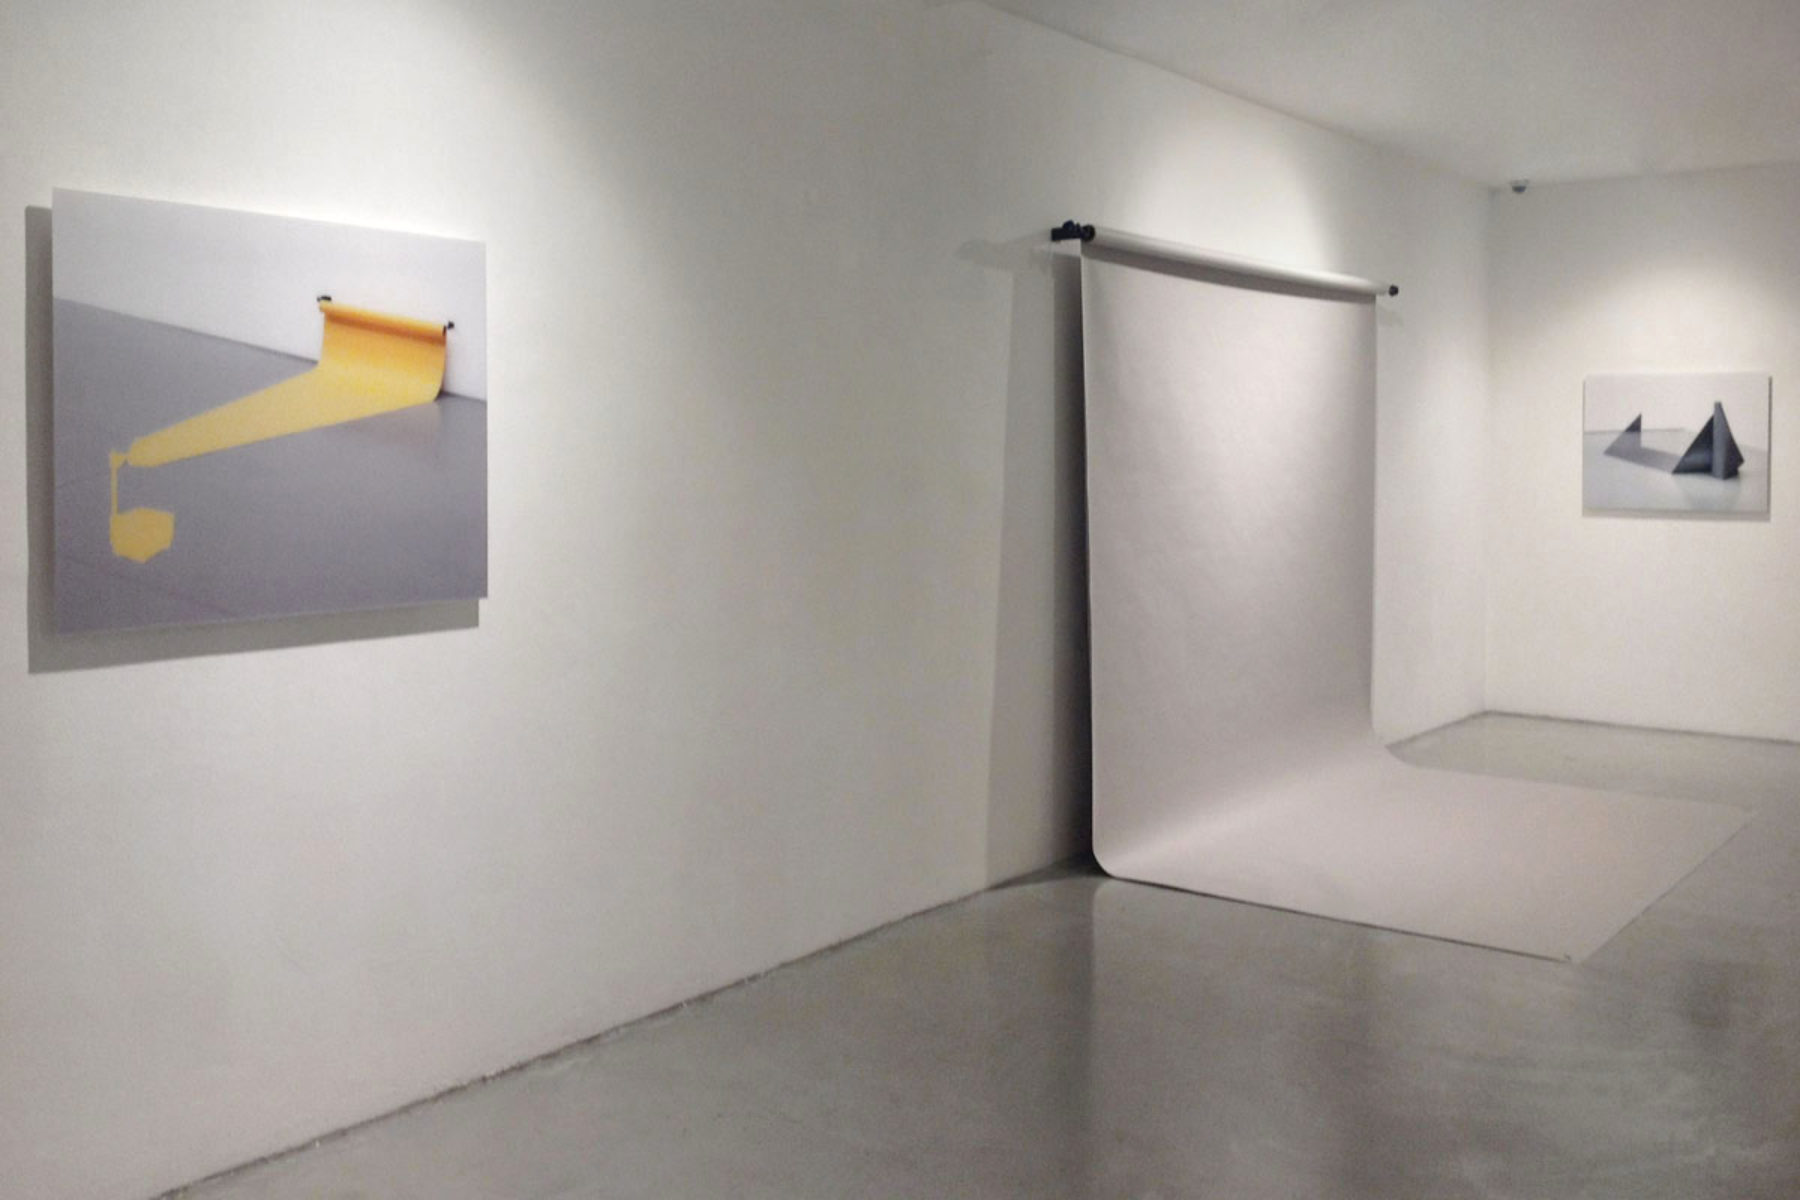 I. Eškinja, Infinity paper, 2013, show view at Deanesi Gallery, 13